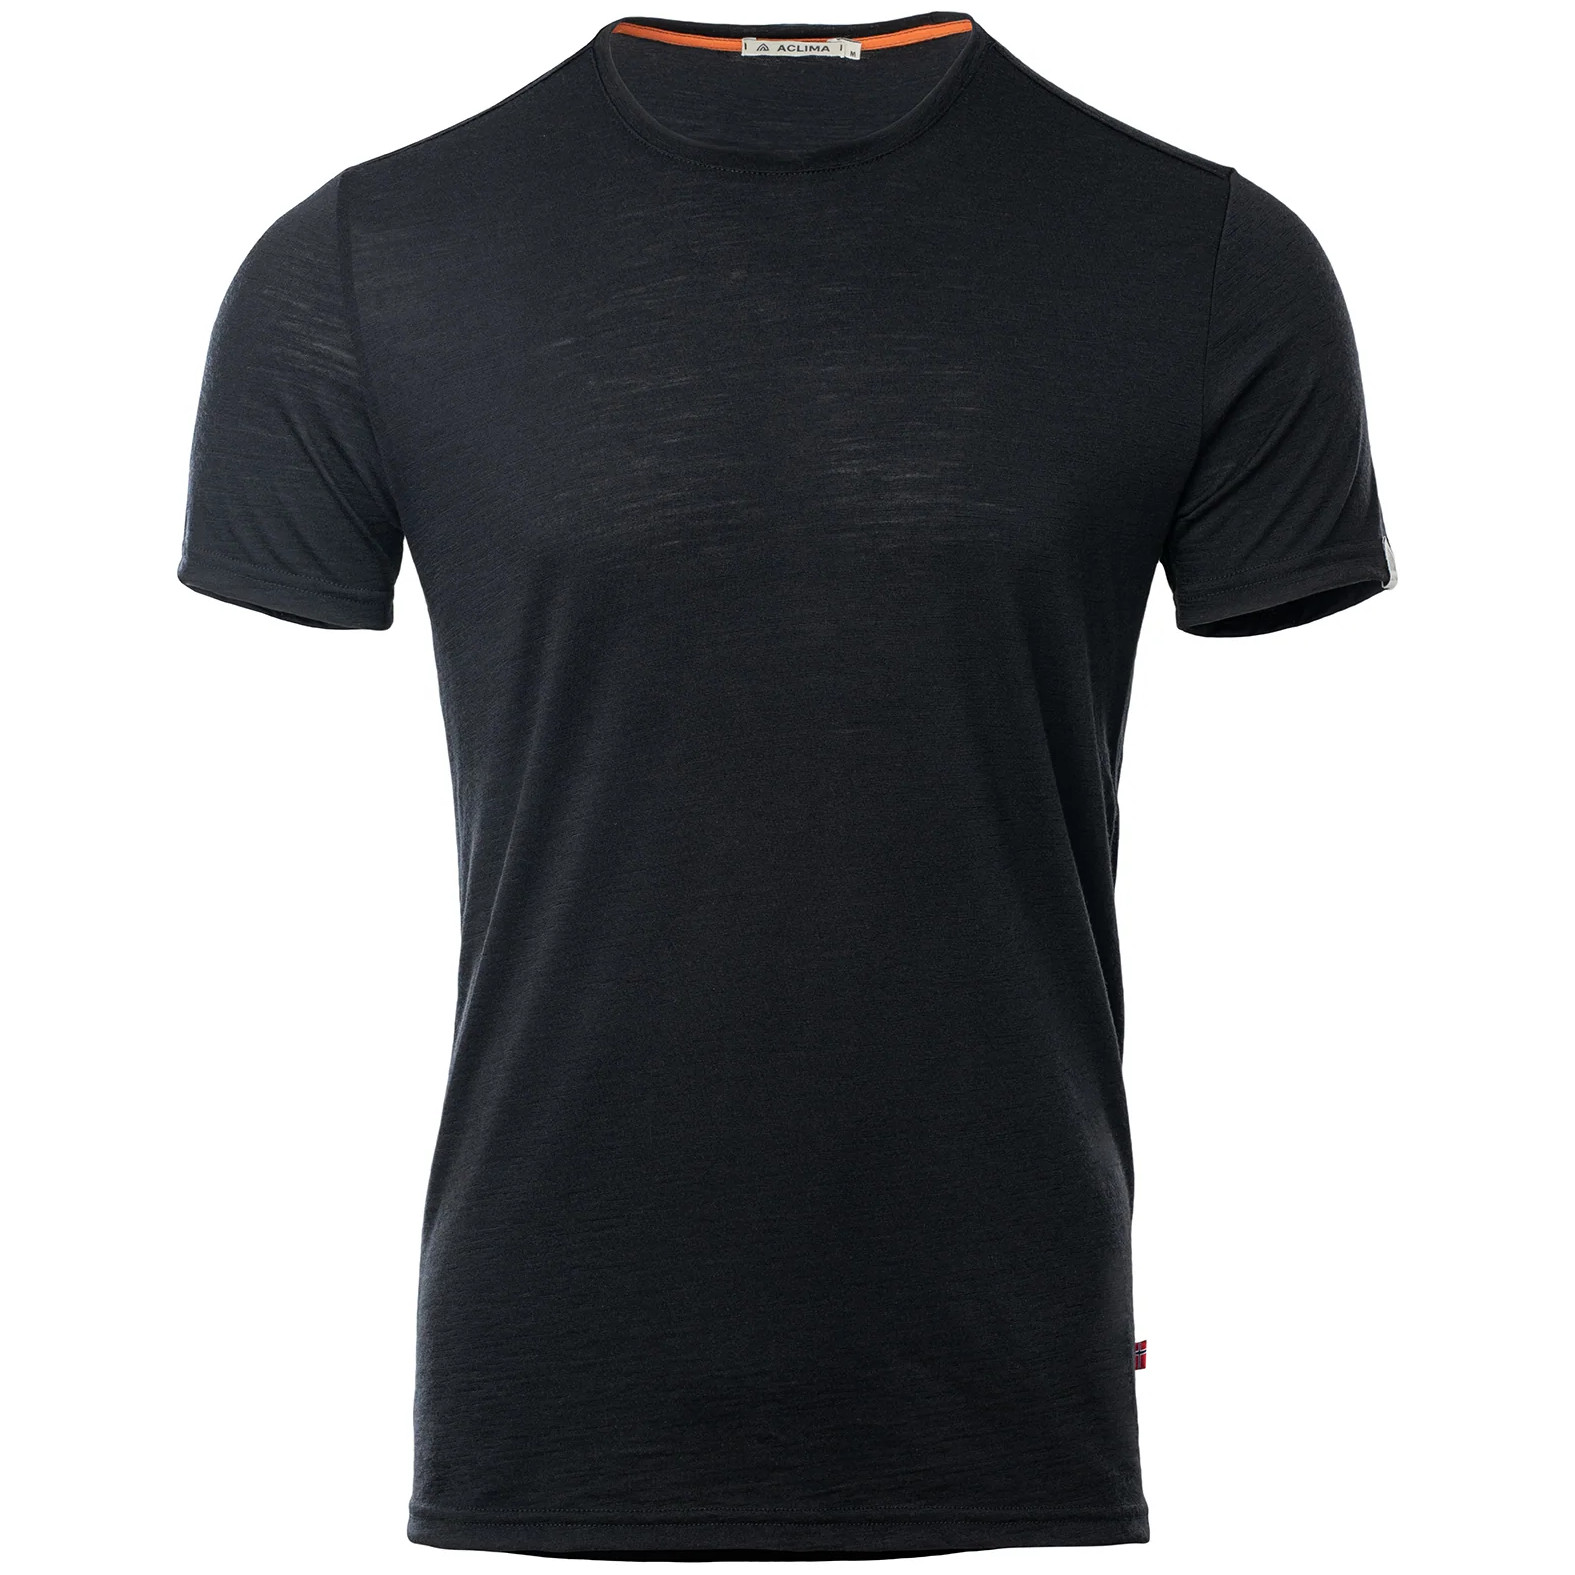 Productfoto van Aclima Lightwool T-Shirt - jet black